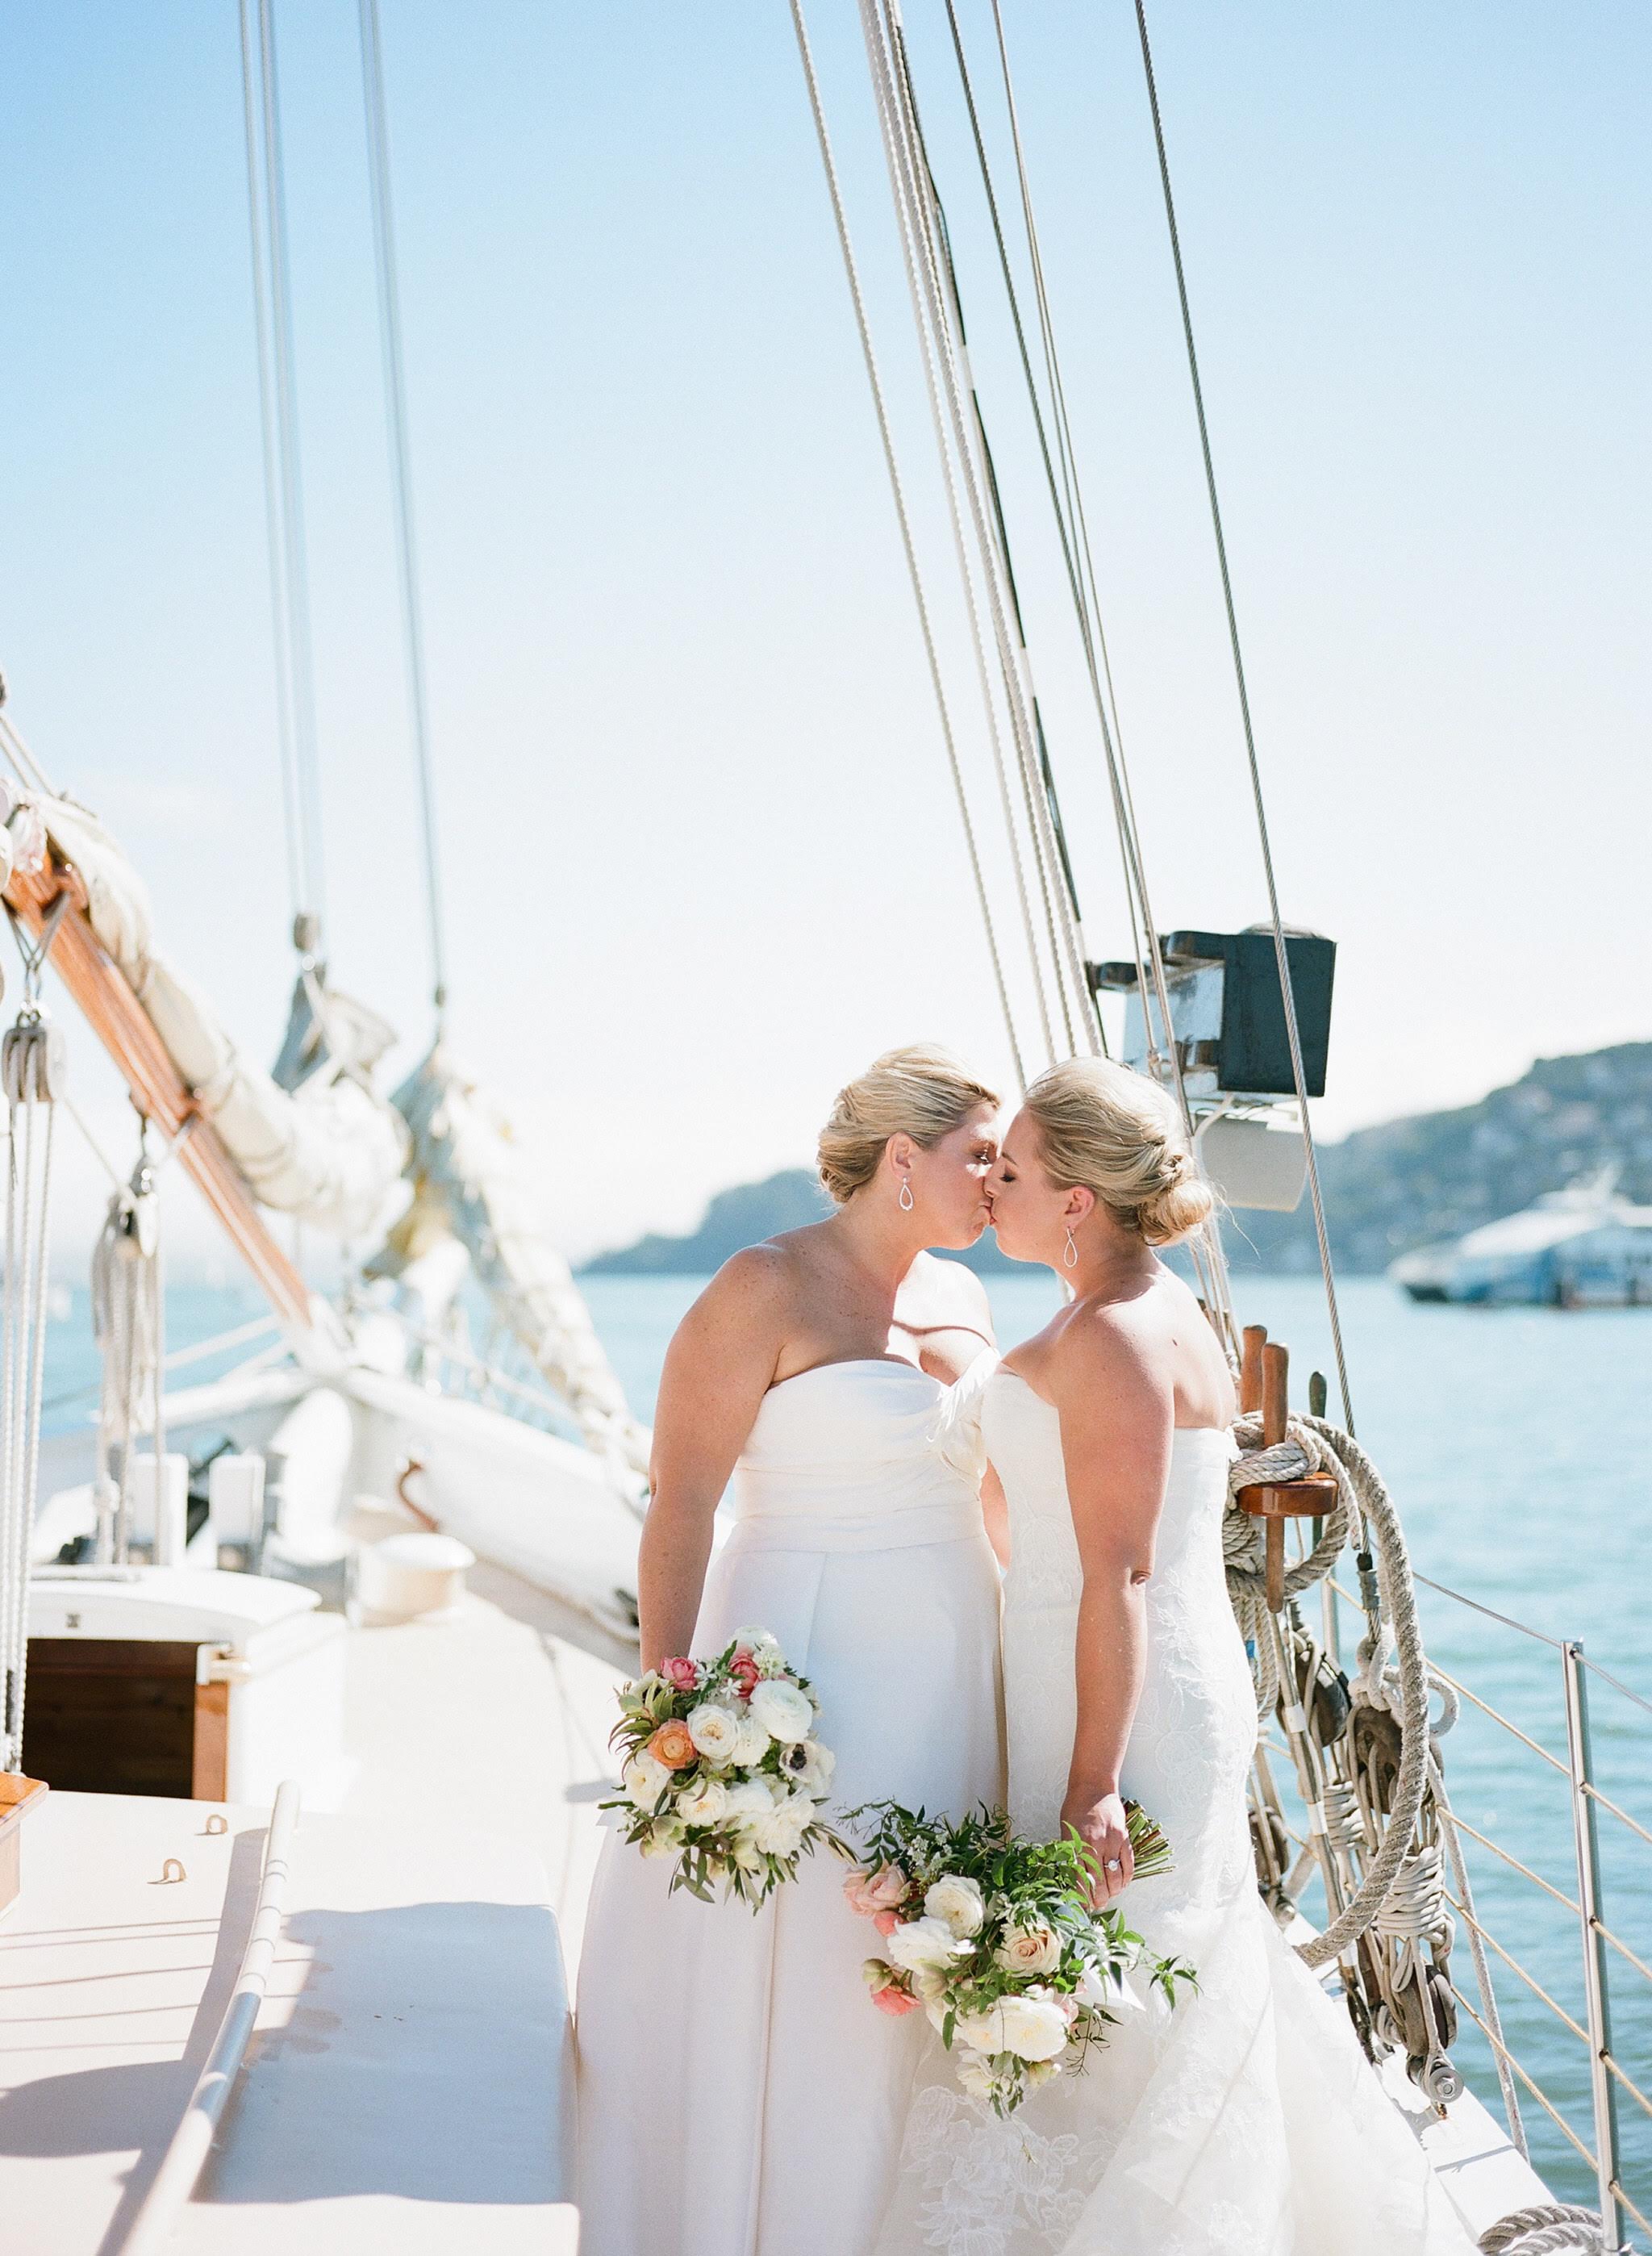 090418_AK_Sausalito-Yacht-Club-Wedding_Buena-Lane-Photography_129.jpg